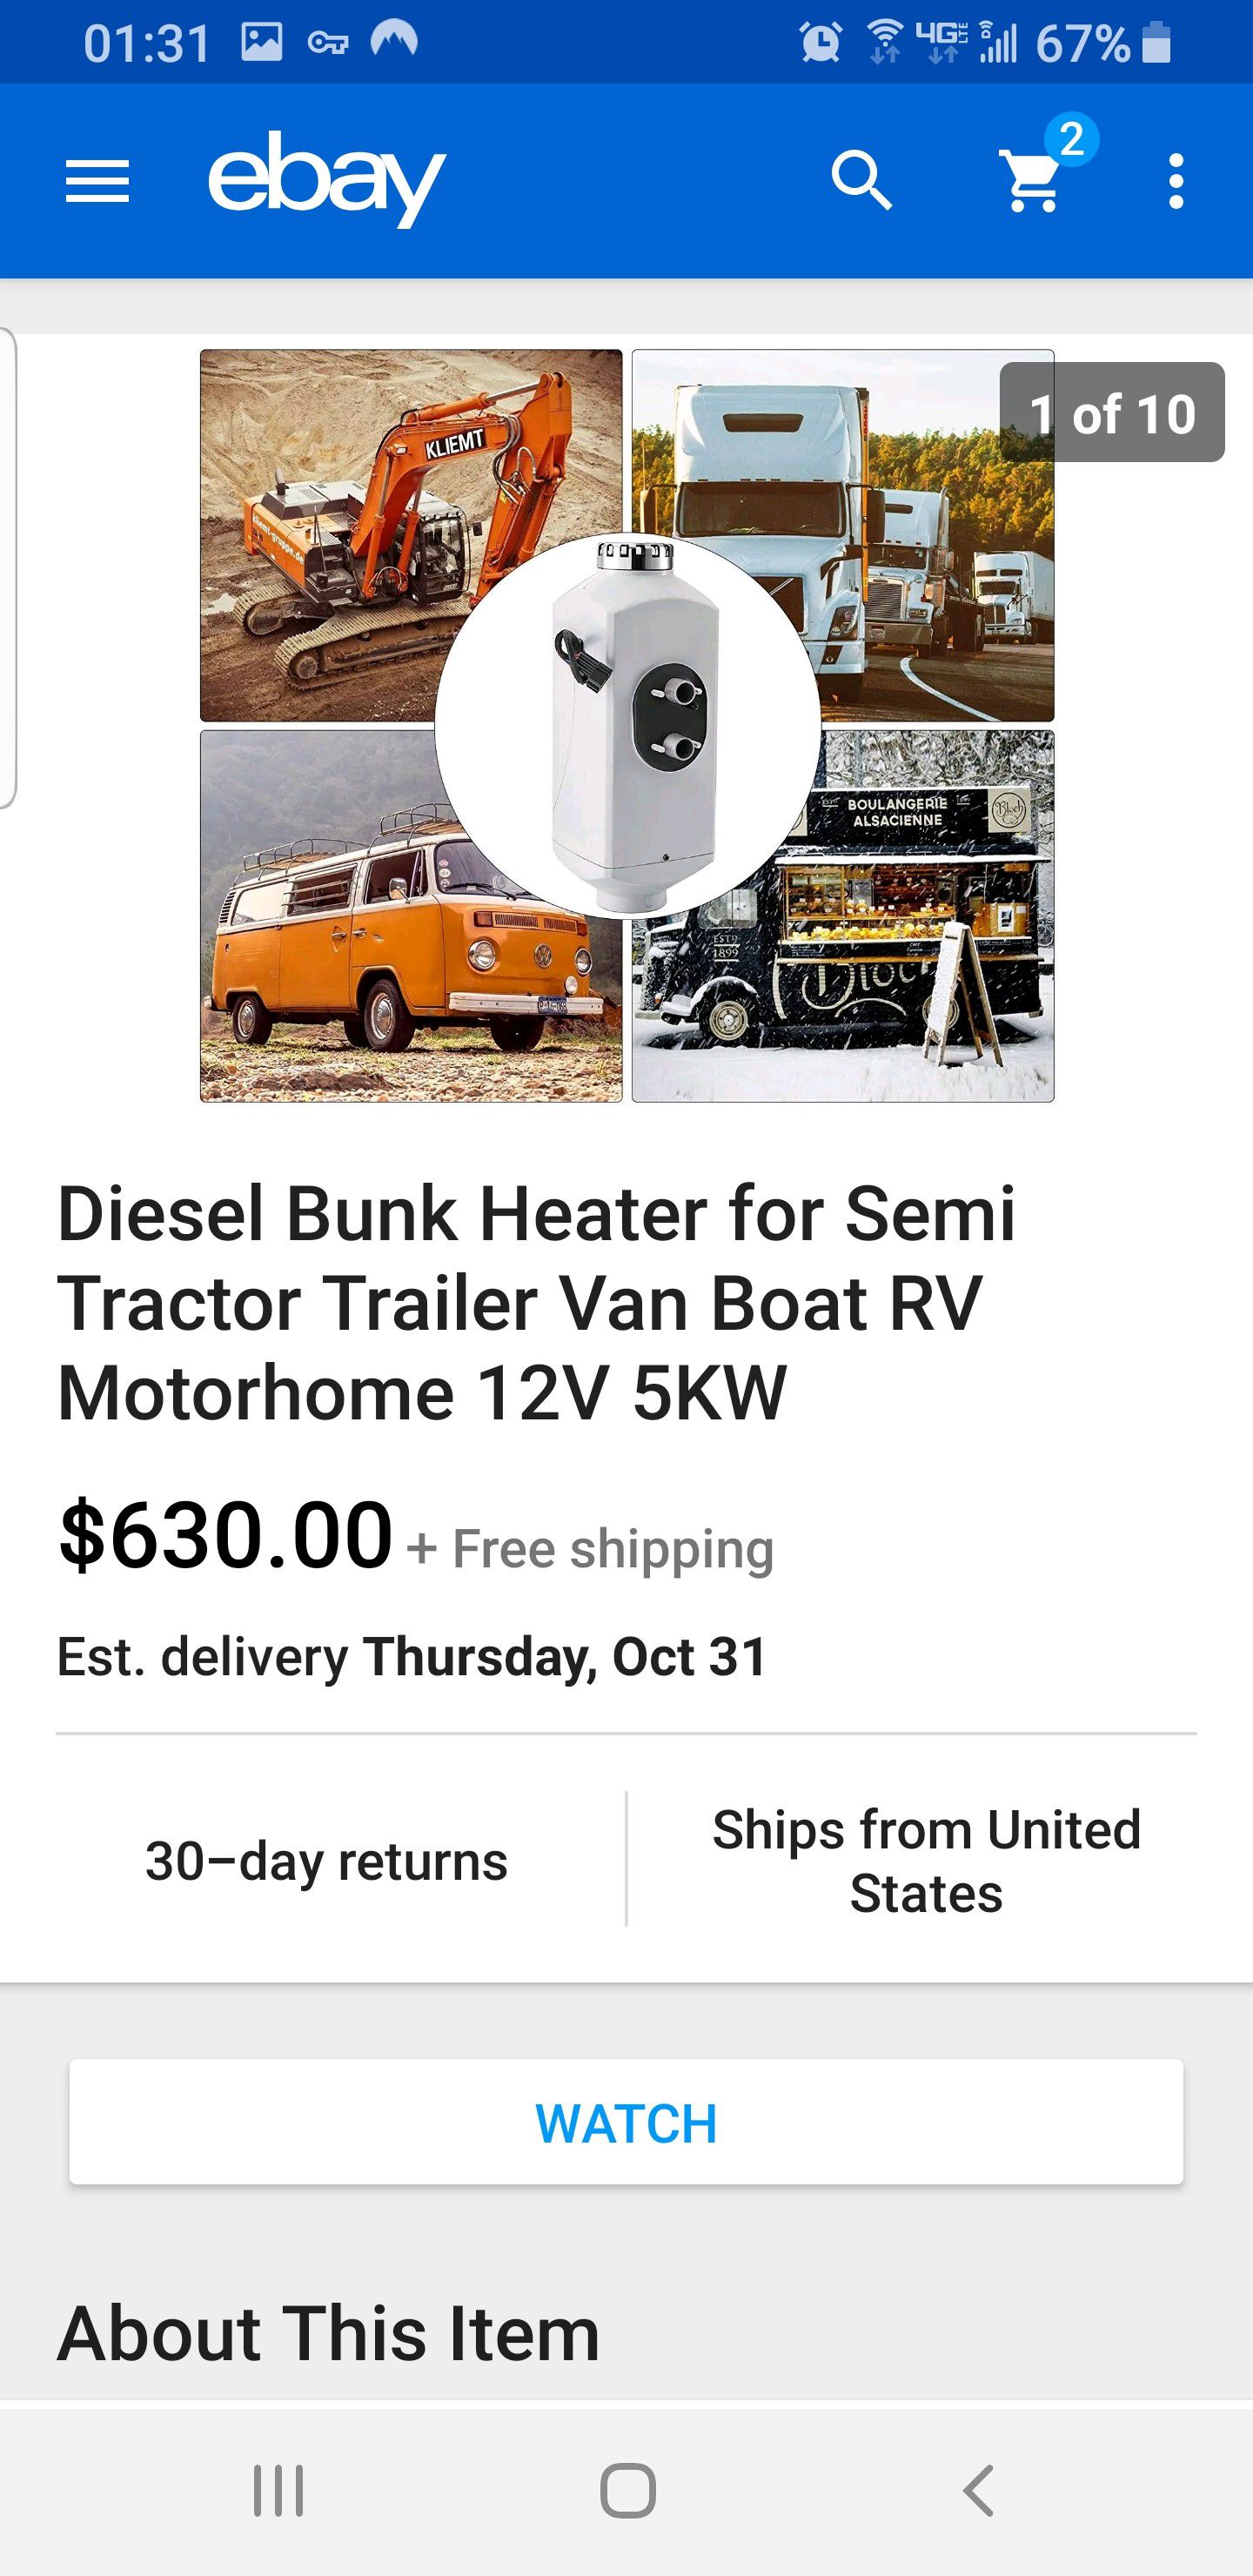 Diesel Bunk Heater for Semi Tractor Trailer Van Boat RV Motorhome